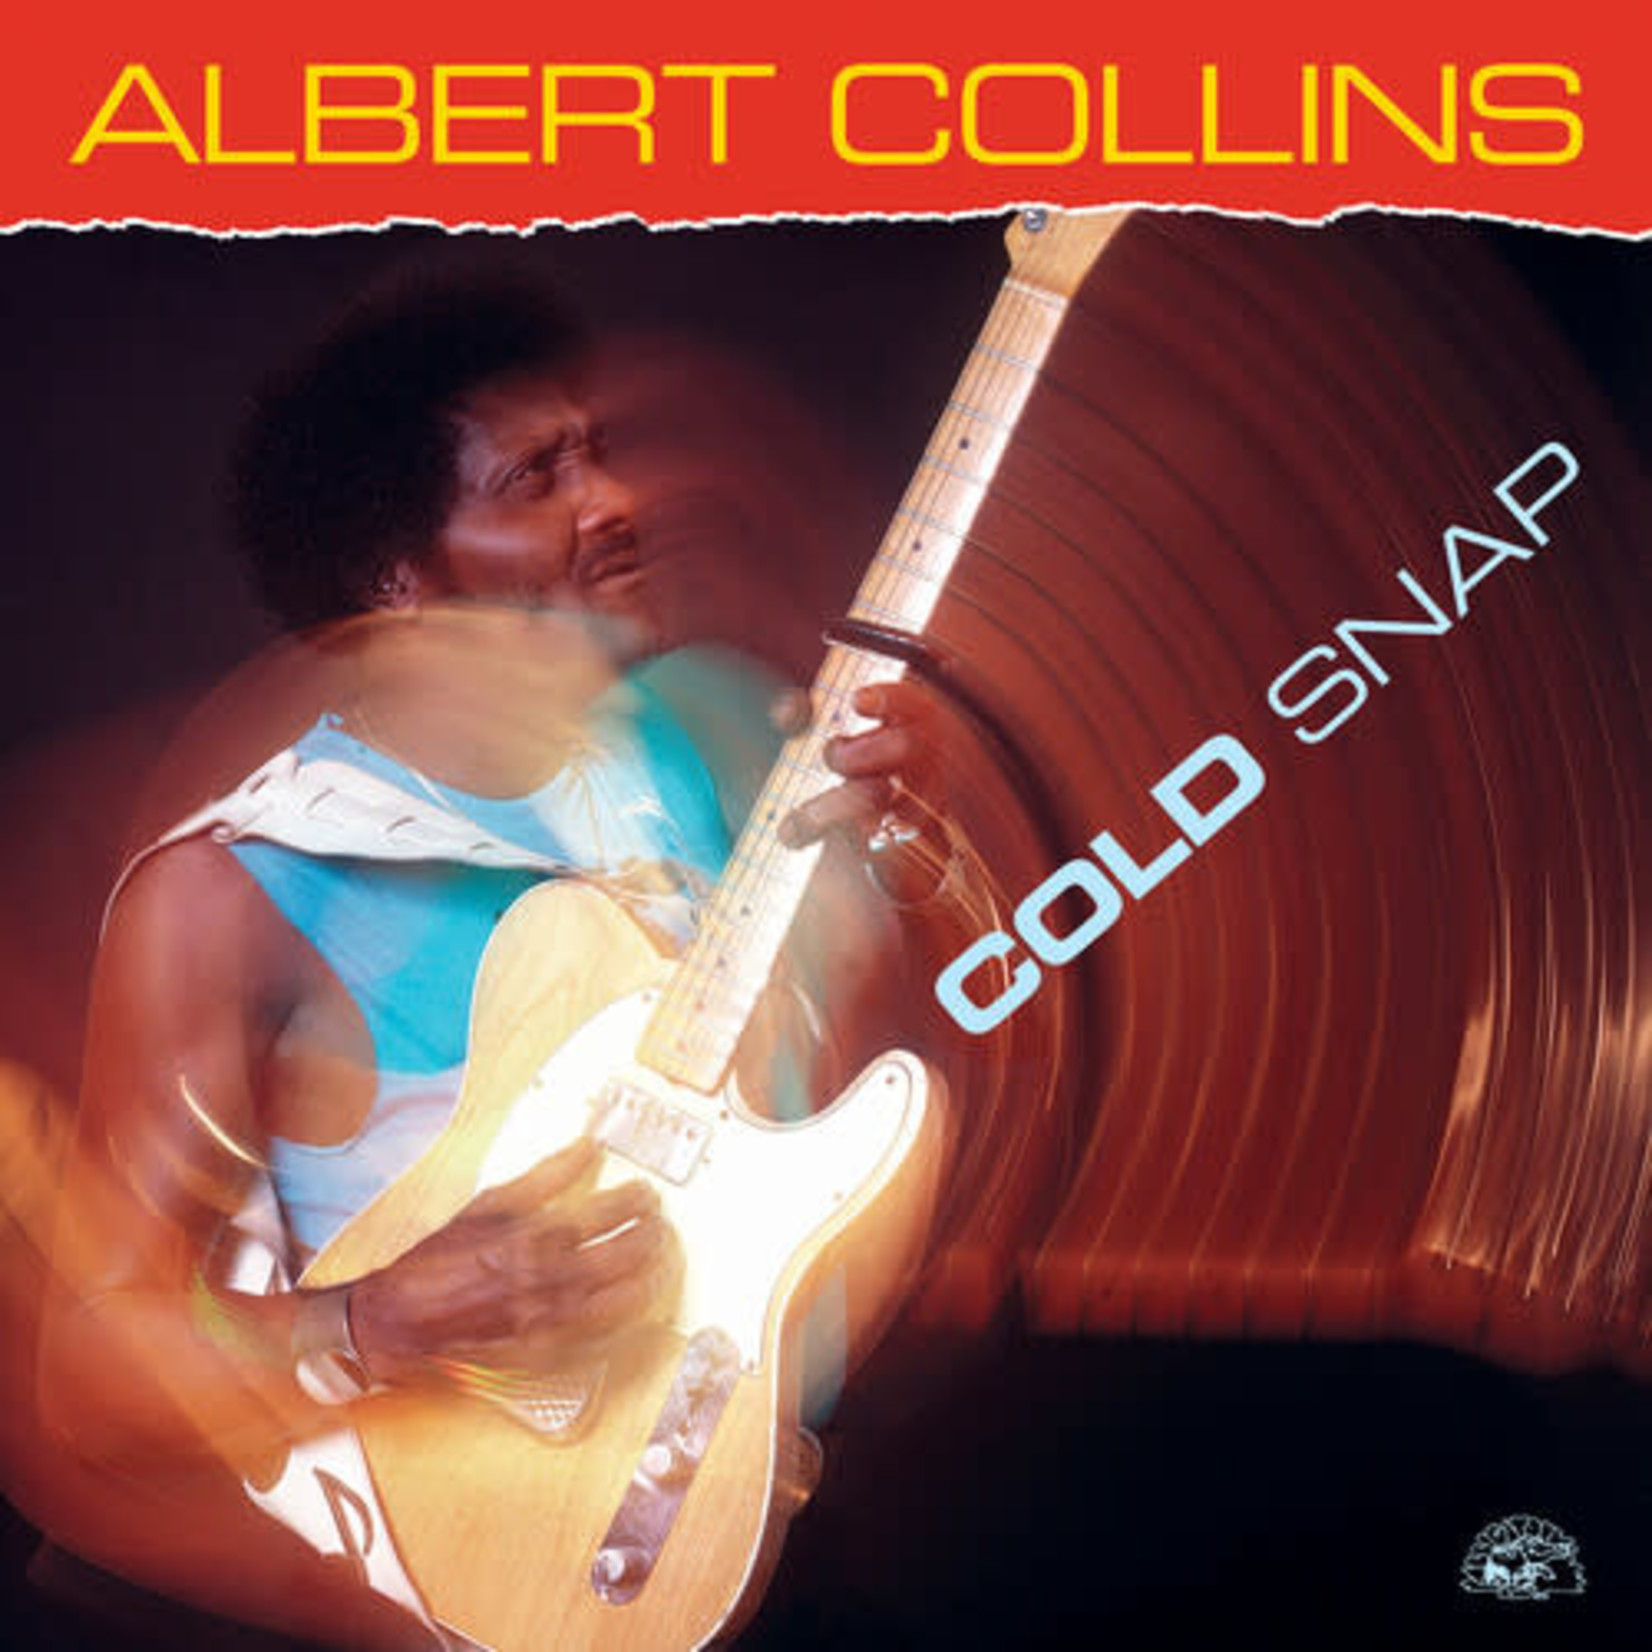 Albert Collins - Cold Snap [LP]